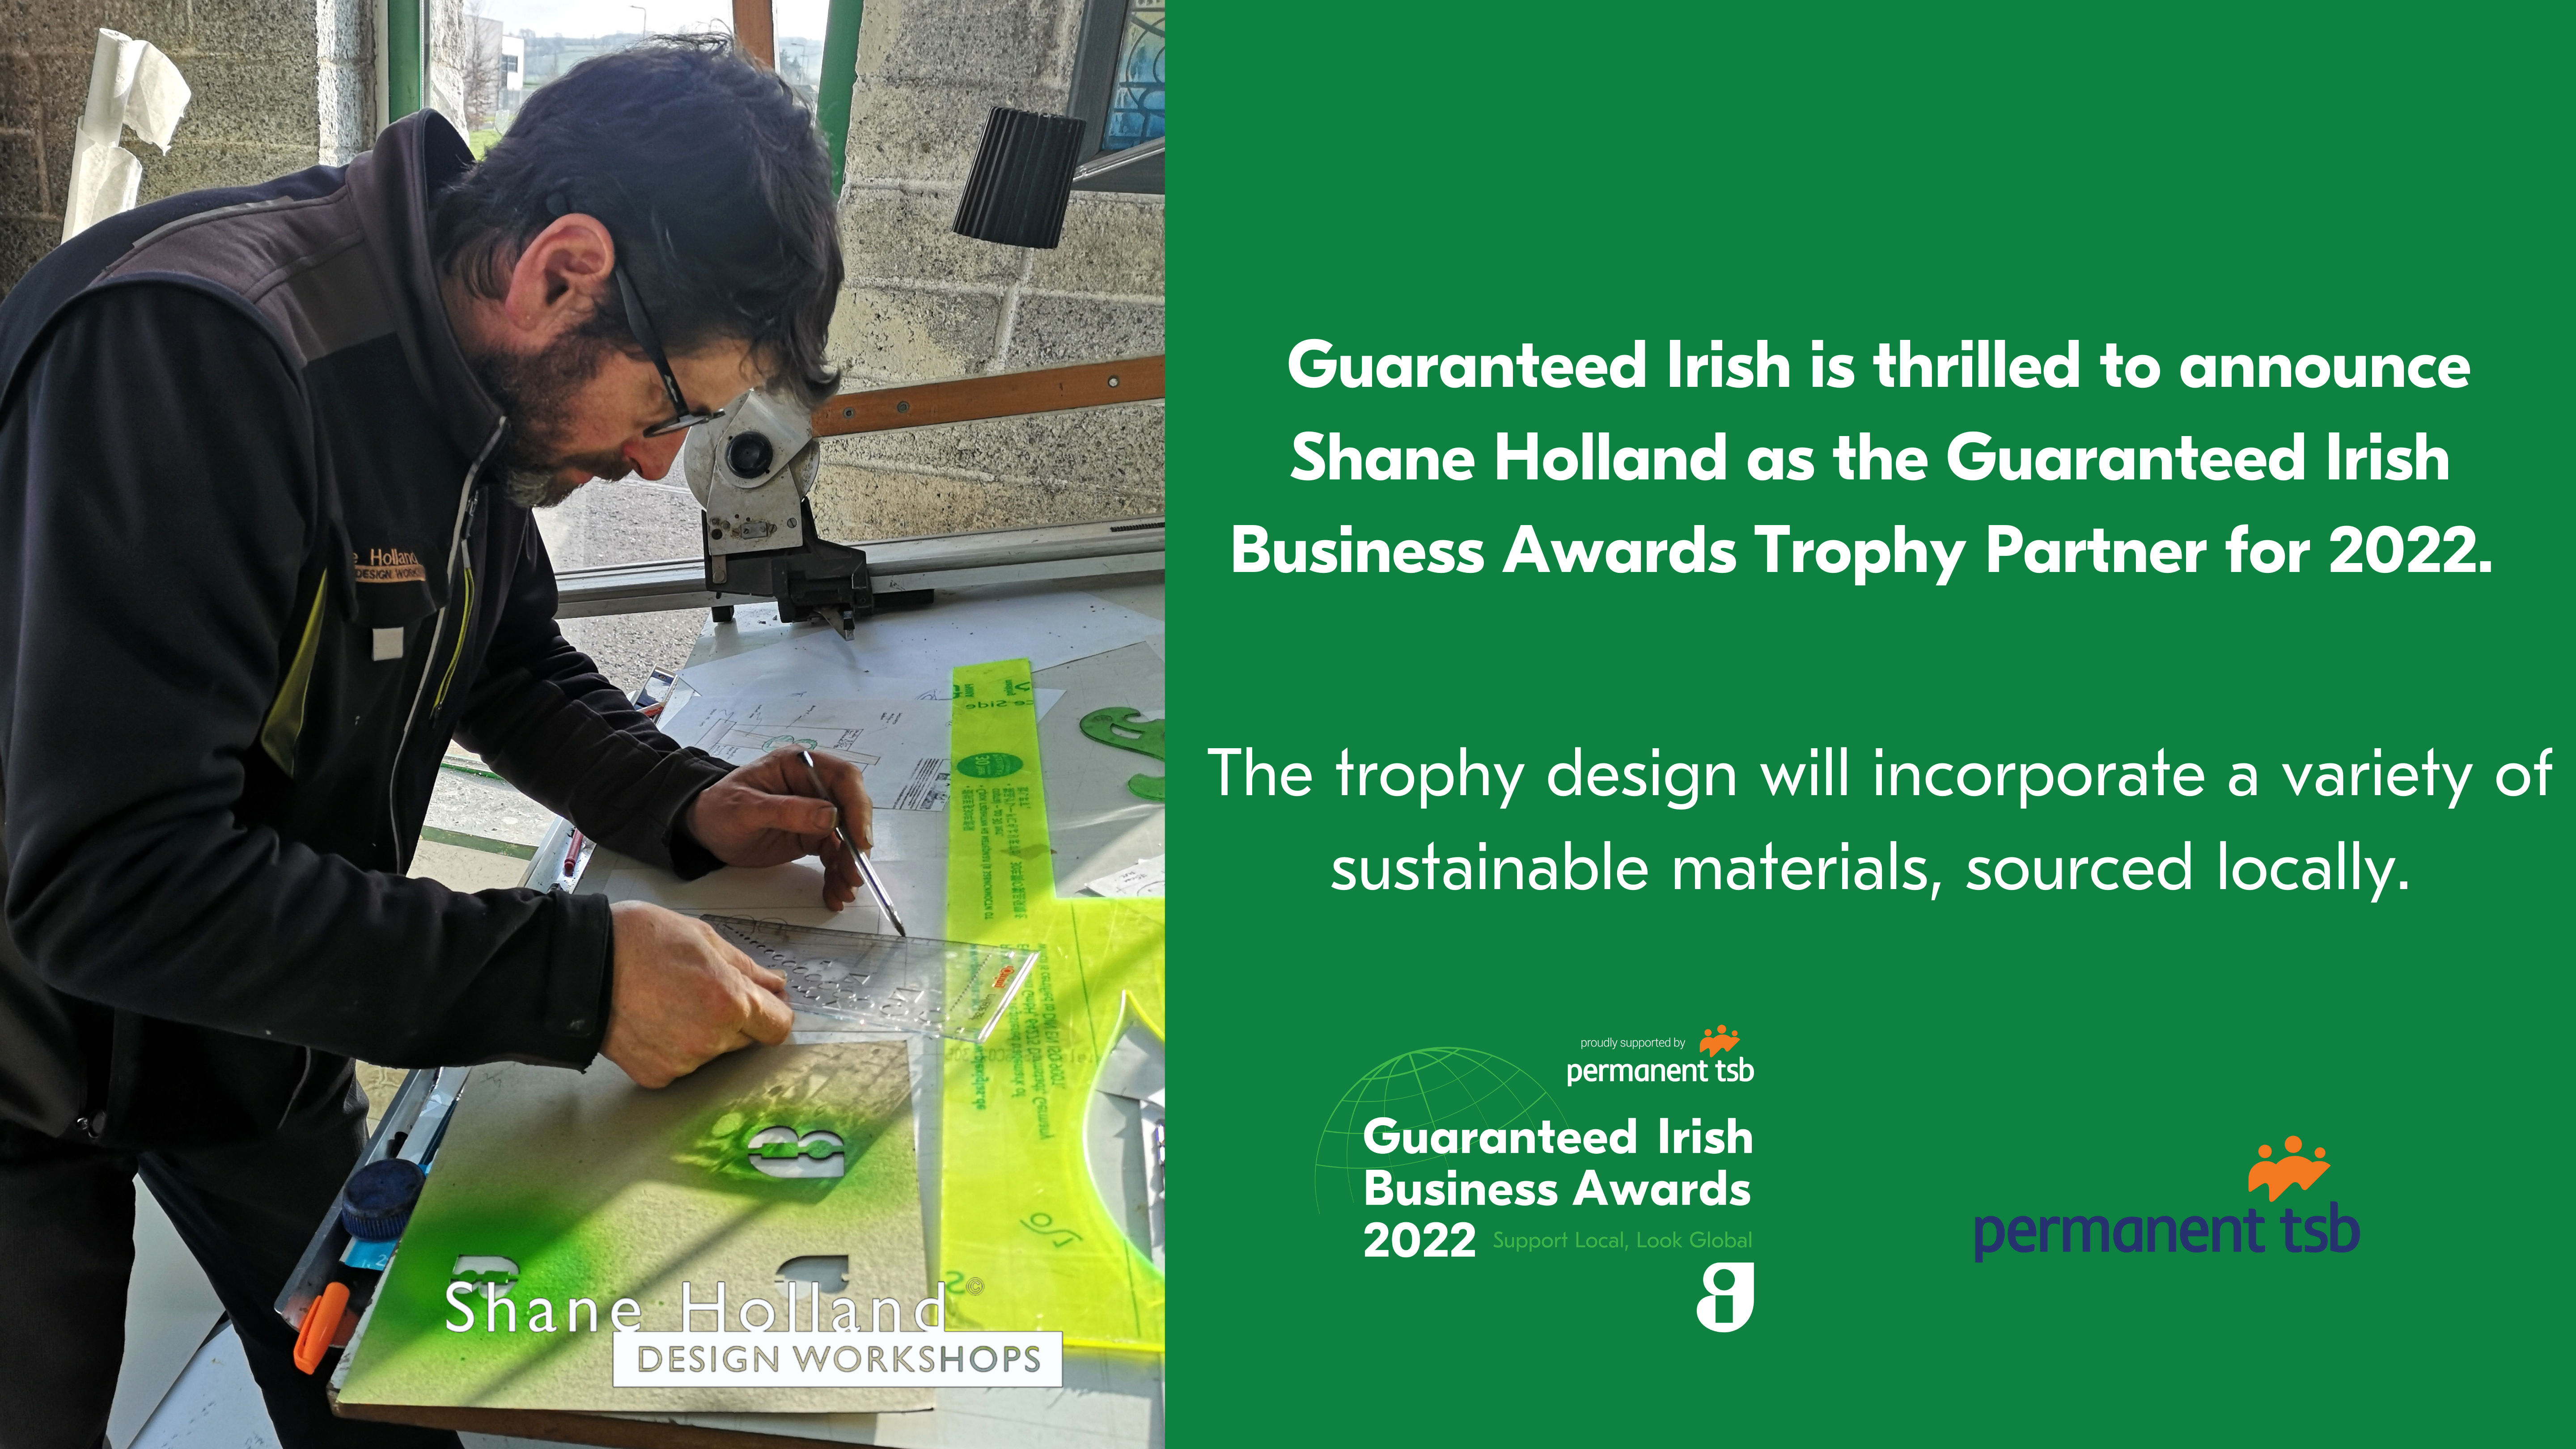 Announcing the Guaranteed Irish Business Awards Trophy Partner, 2022